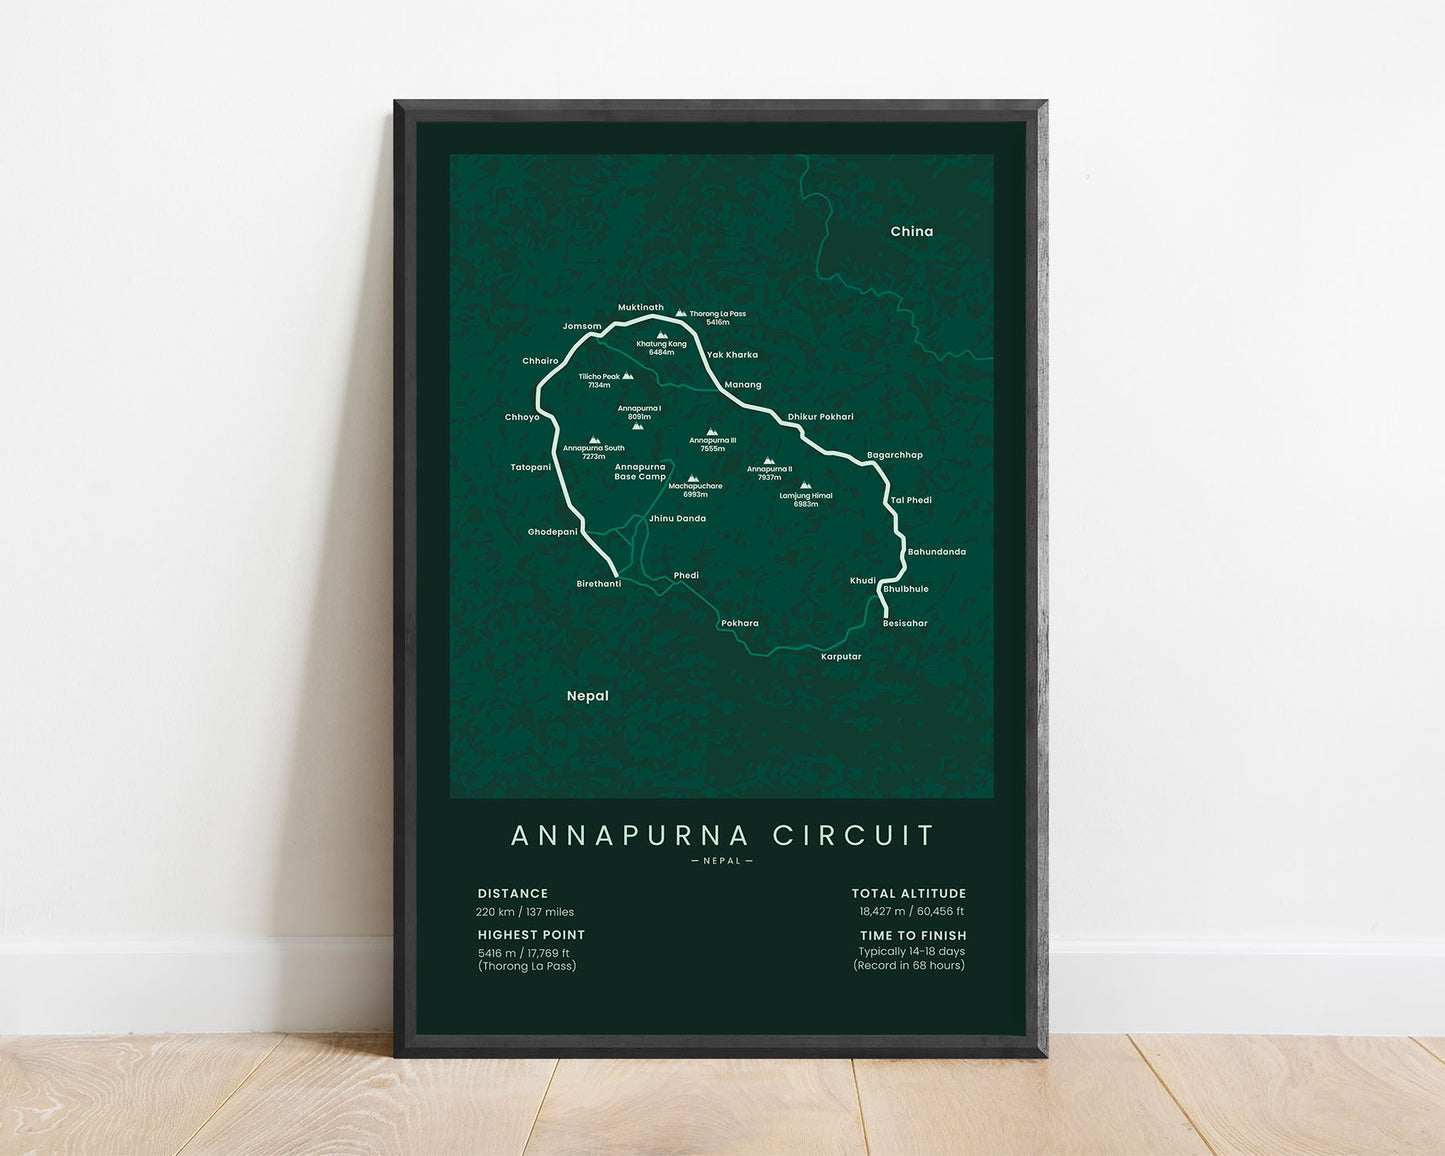 Annapurna Circuit (Nepal) trek print with green background